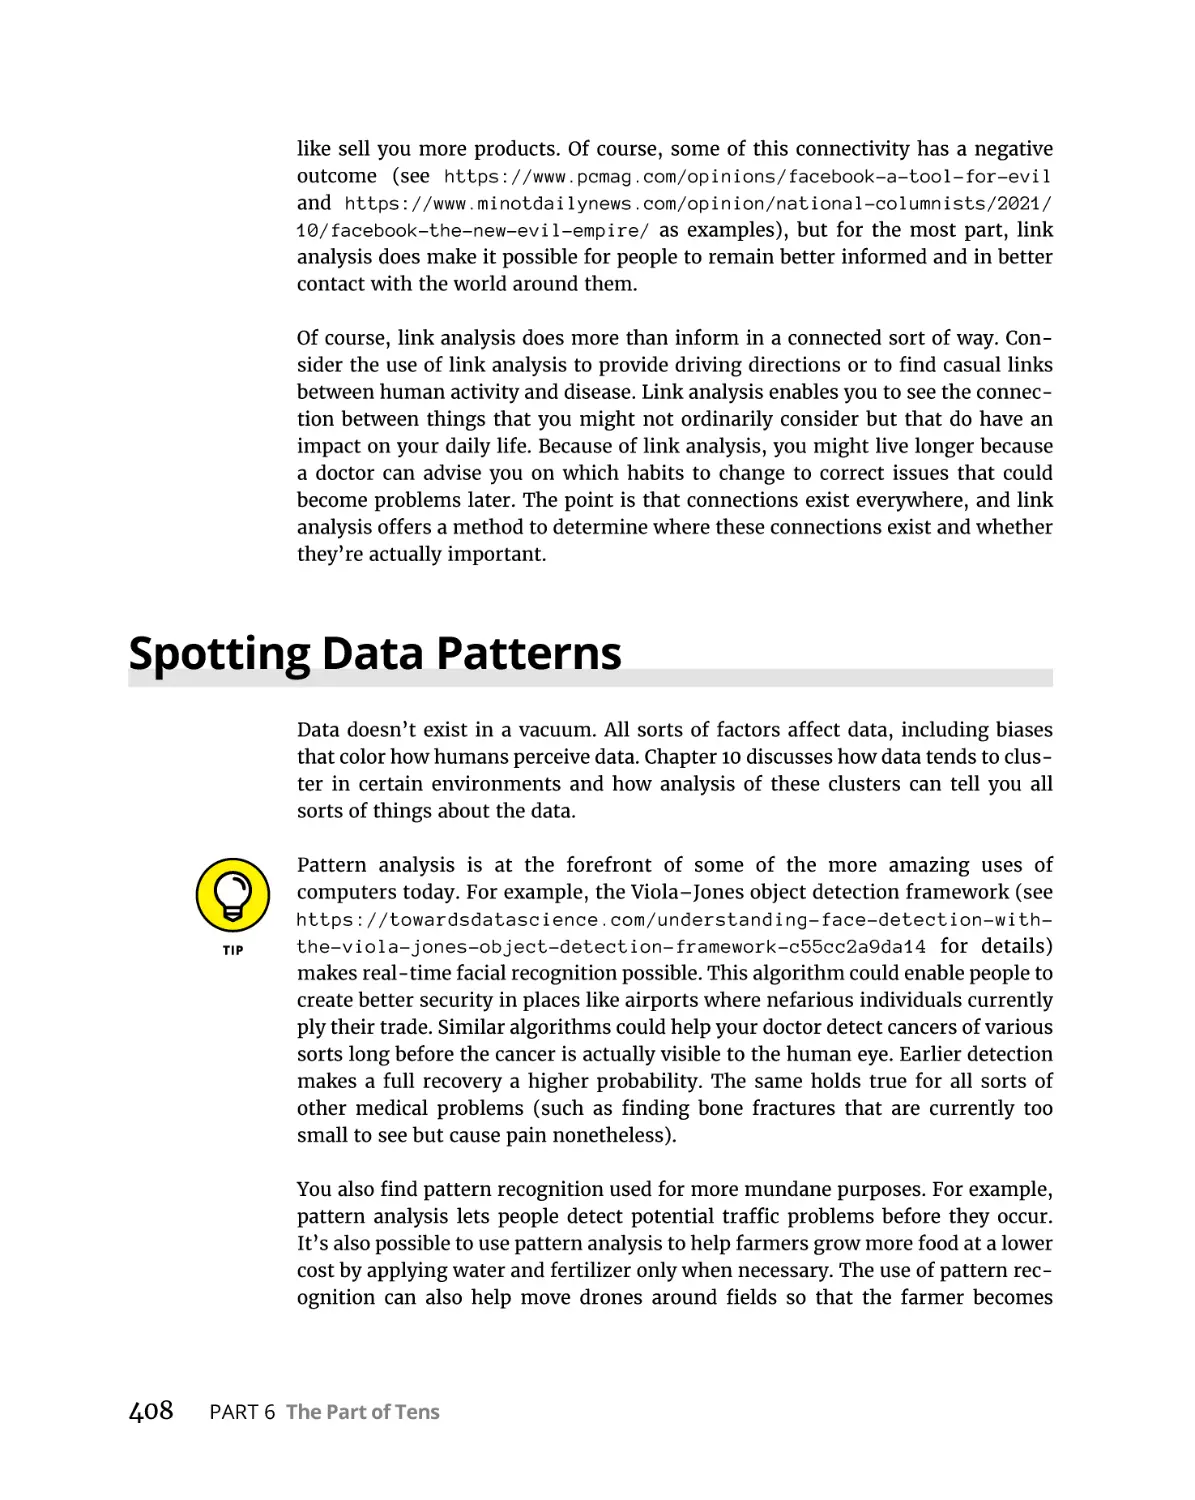 Spotting Data Patterns